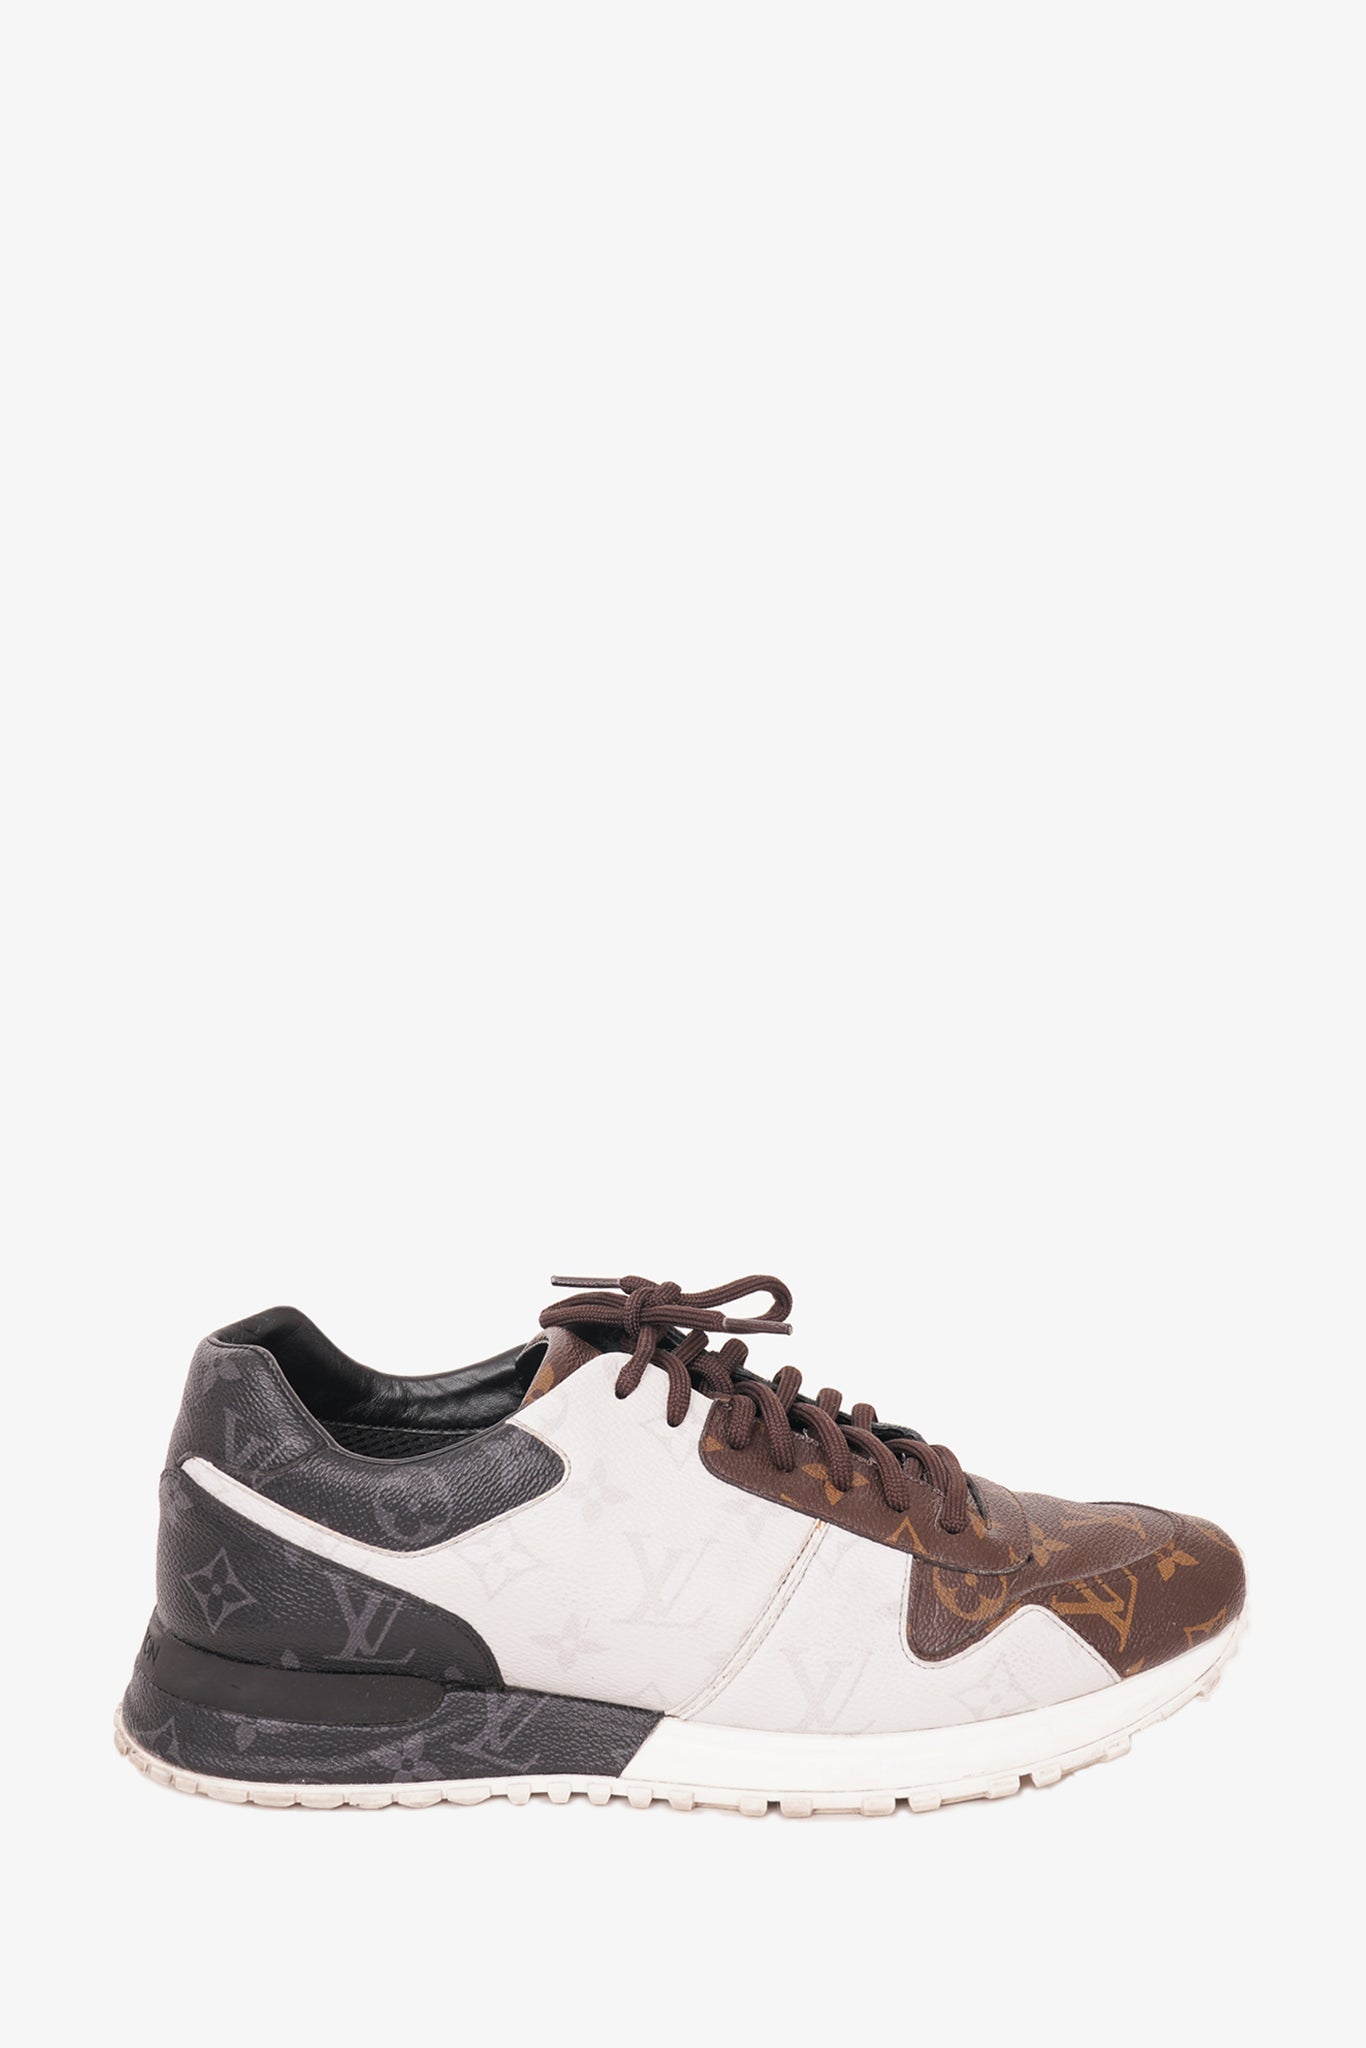 Louis Vuitton Tri-Colour Runaway Monogram Sneakers Size 9